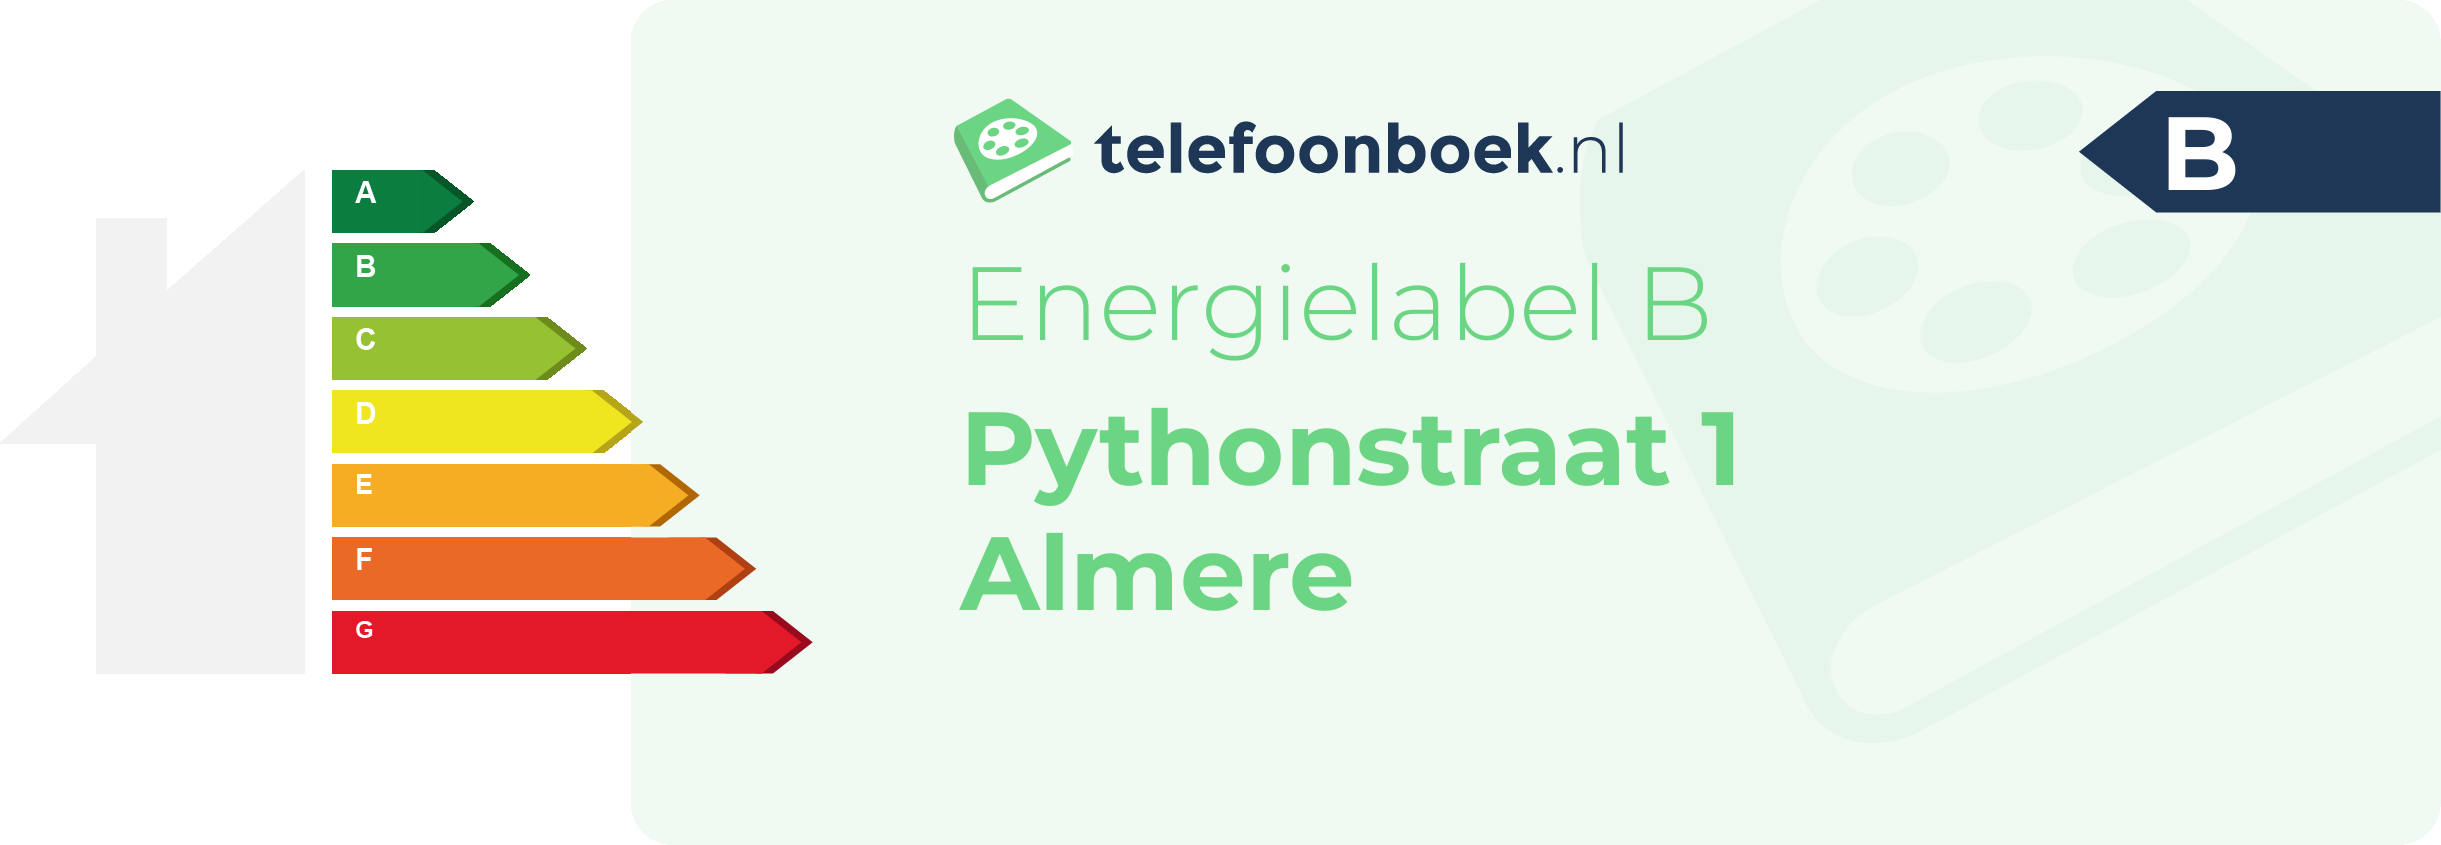 Energielabel Pythonstraat 1 Almere